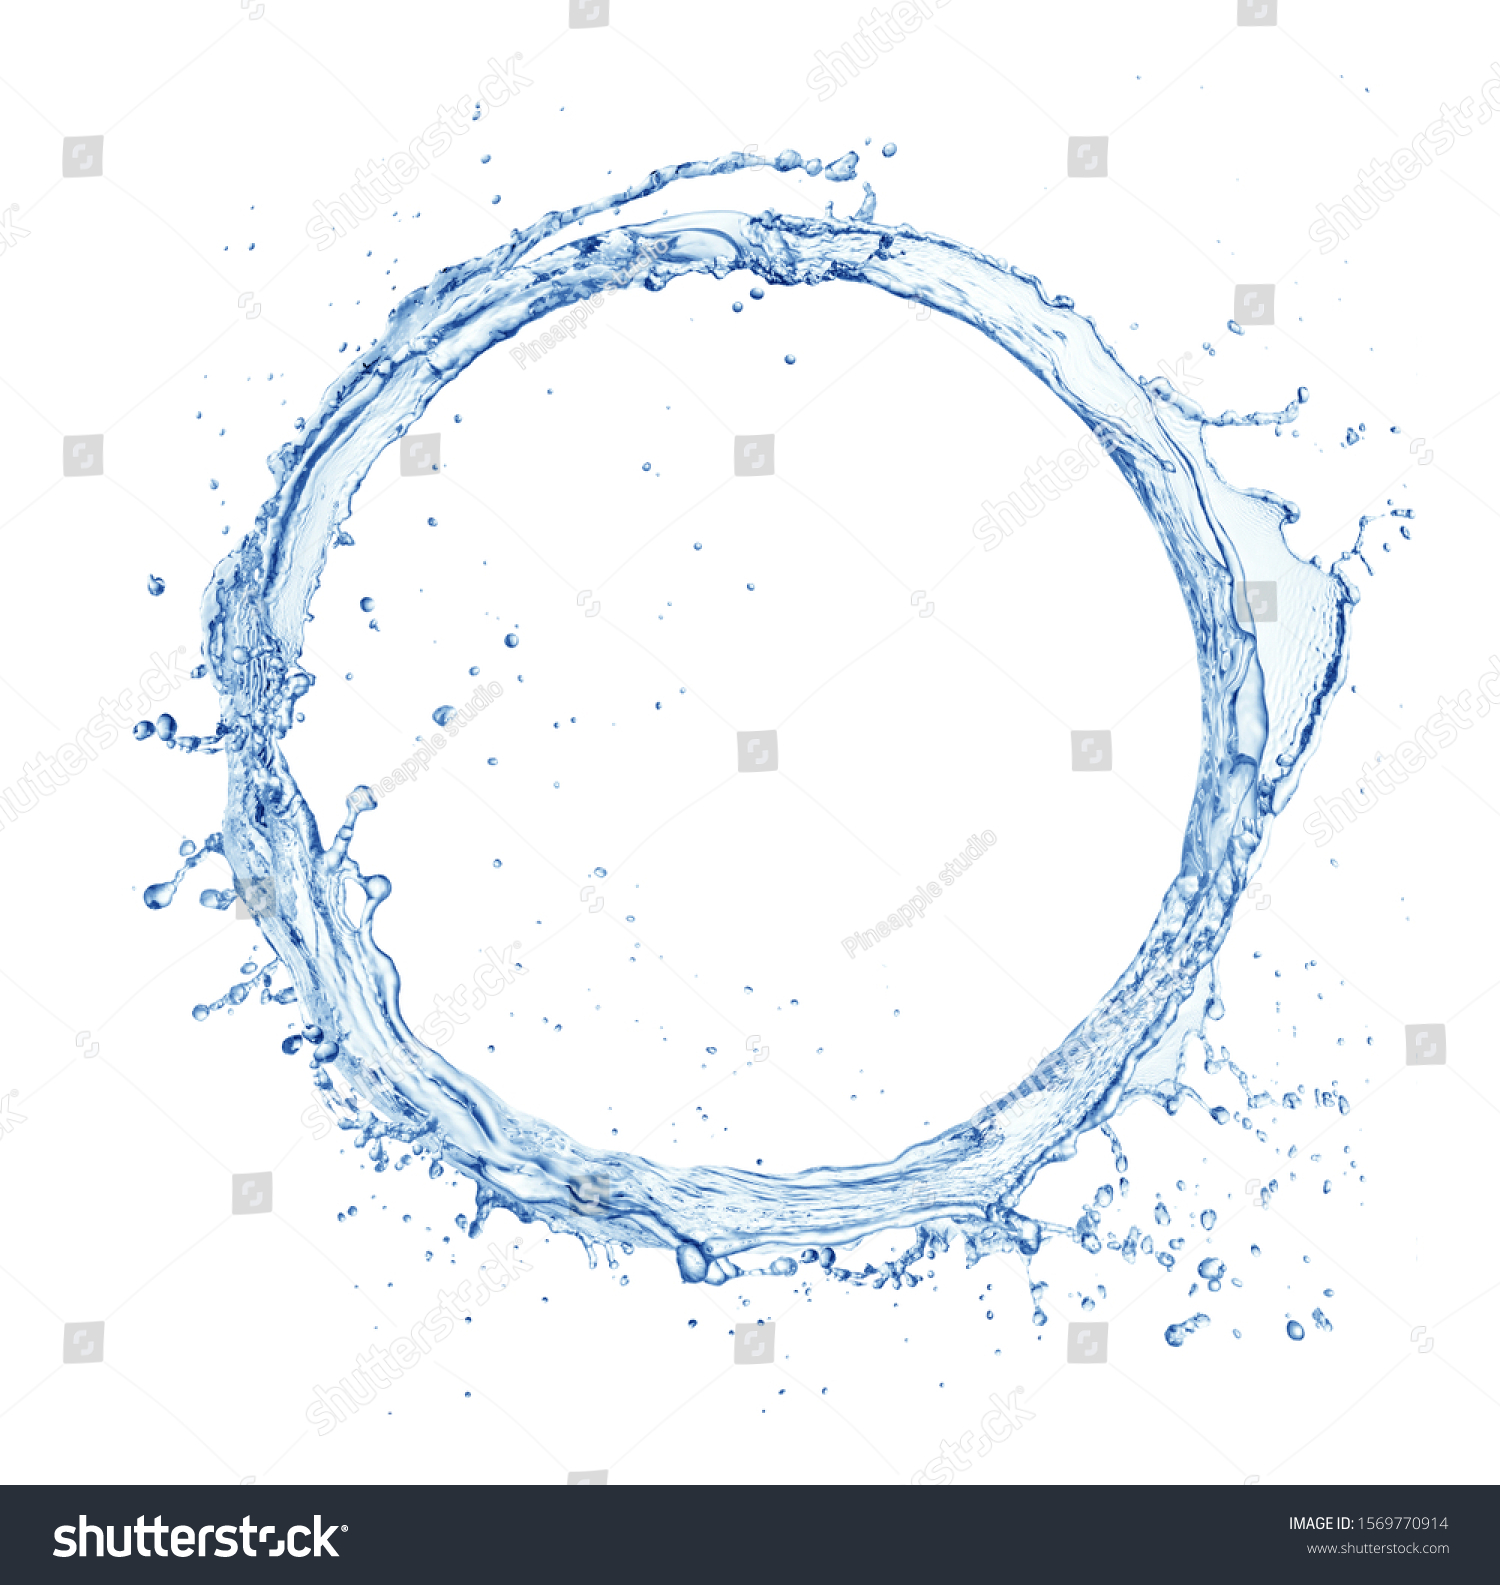 circle made of water splashes isolated on white background #1569770914